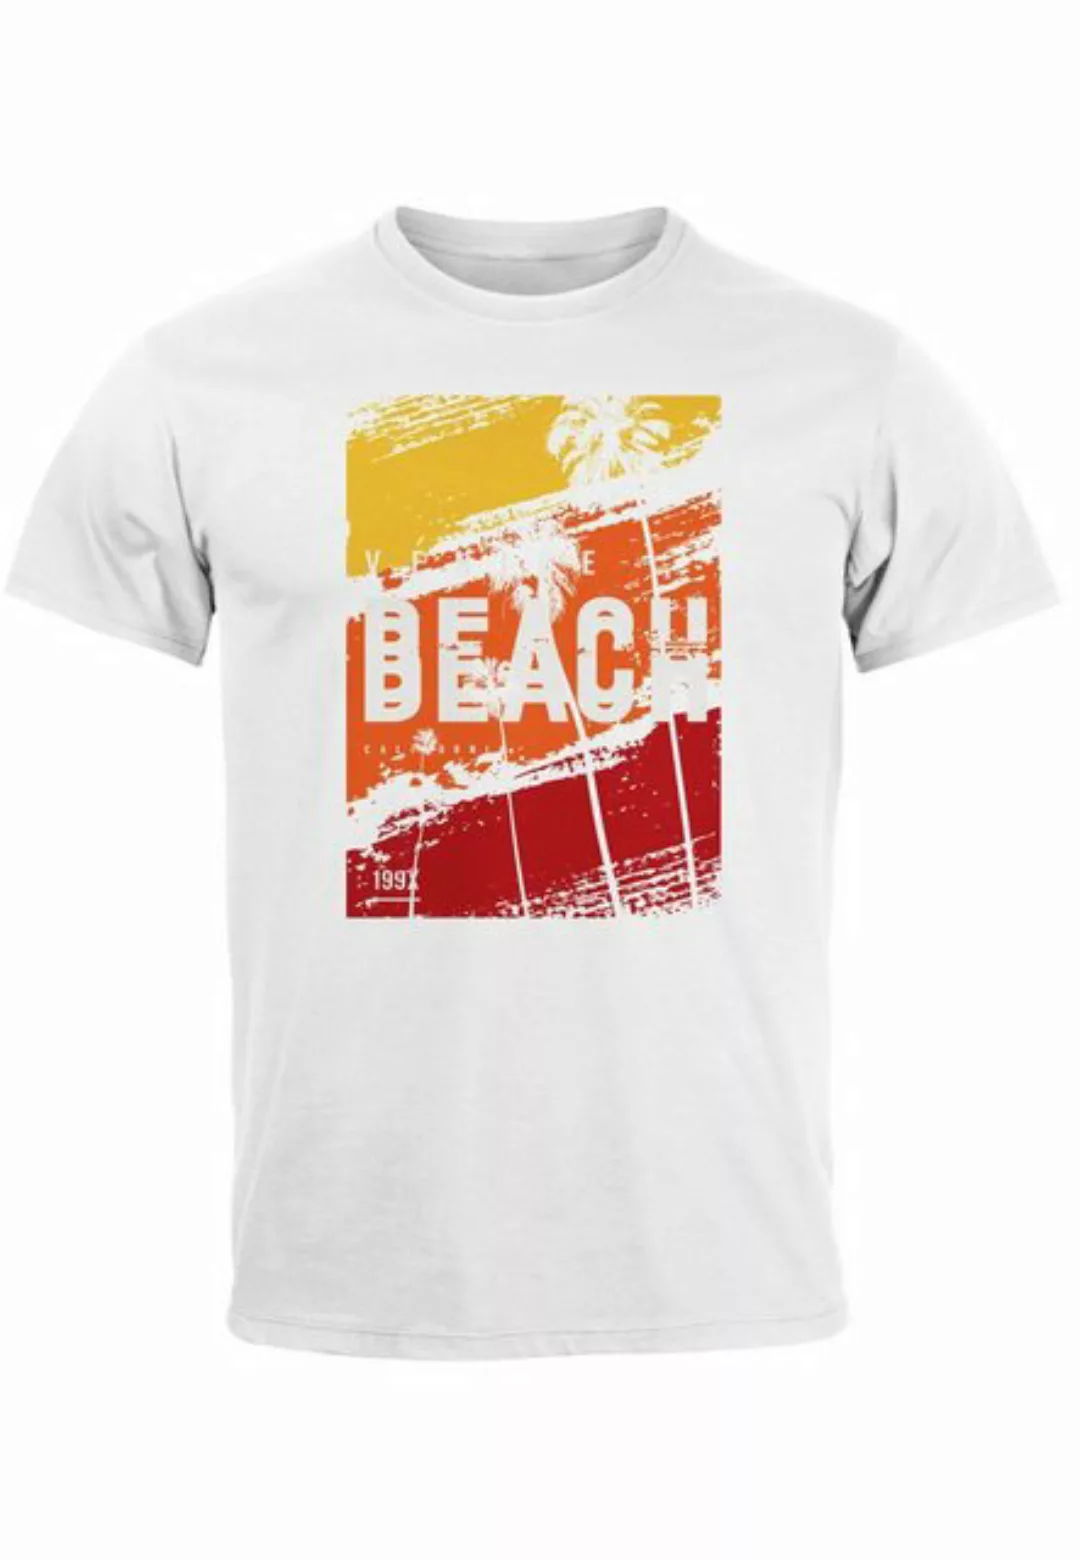 Neverless Print-Shirt Herren T-Shirt Sommer Venice Beach Surfing Motiv Aufd günstig online kaufen